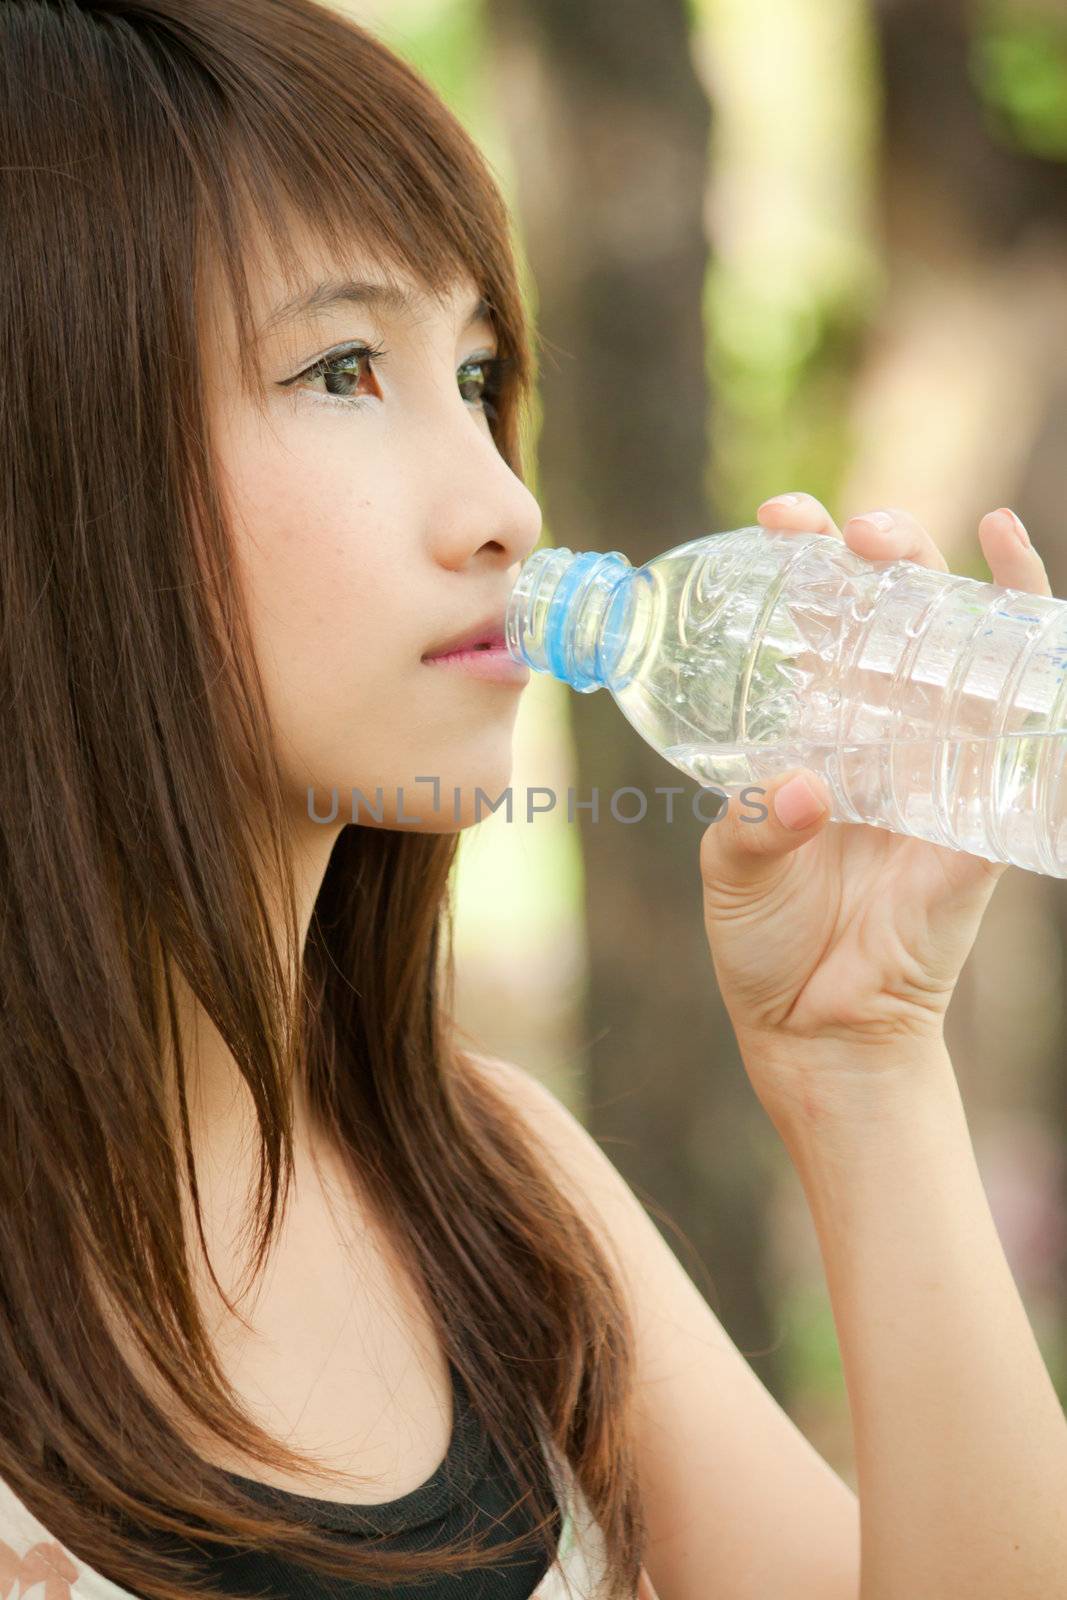 Drinking water by artemisphoto